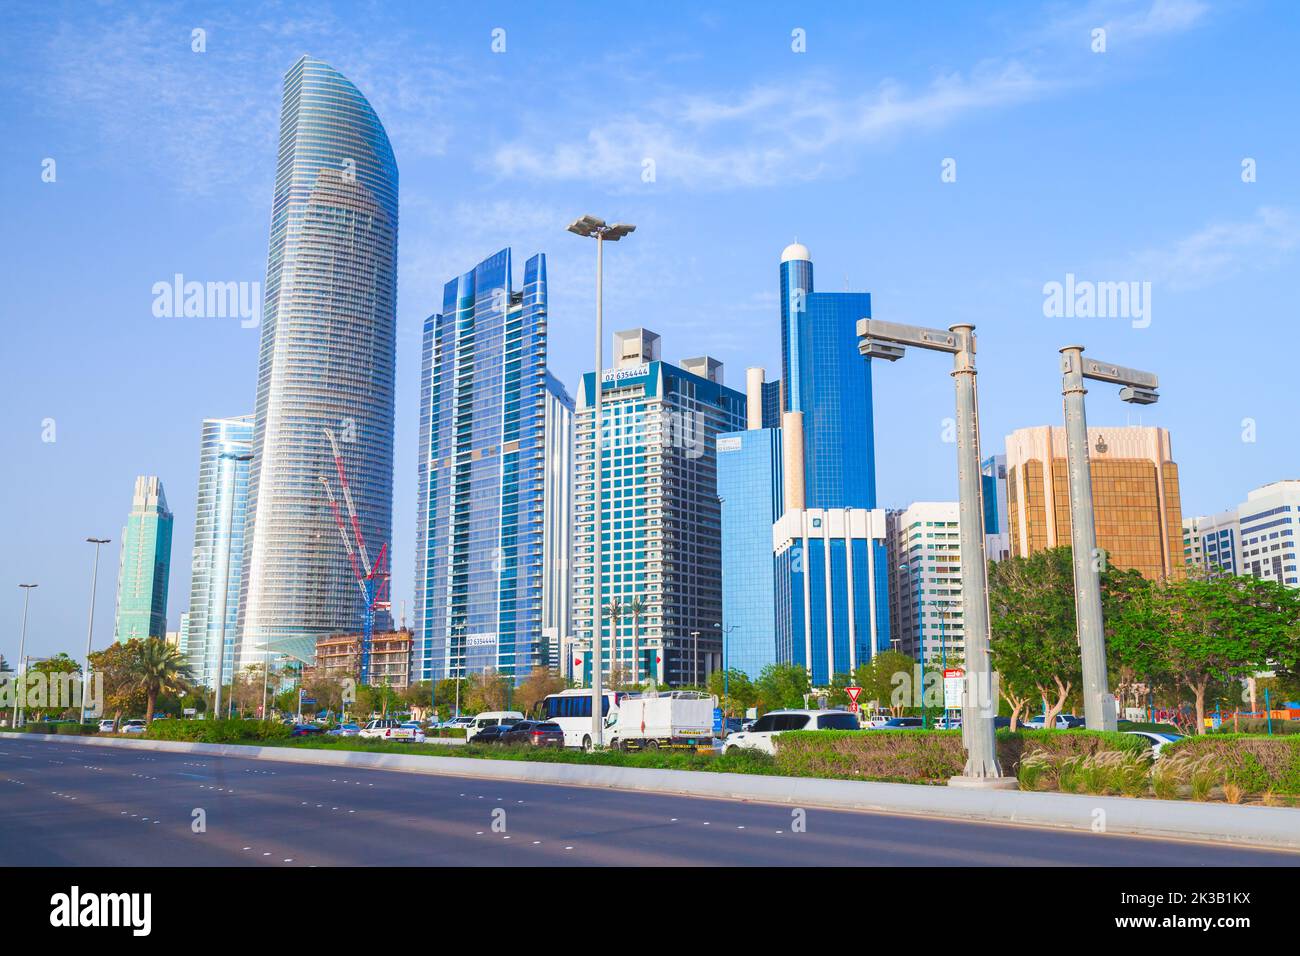 Abu Dhabi, Emiratos Árabes Unidos - 9 de abril de 2019: Paisaje urbano con rascacielos del centro de Abu Dhabi Foto de stock